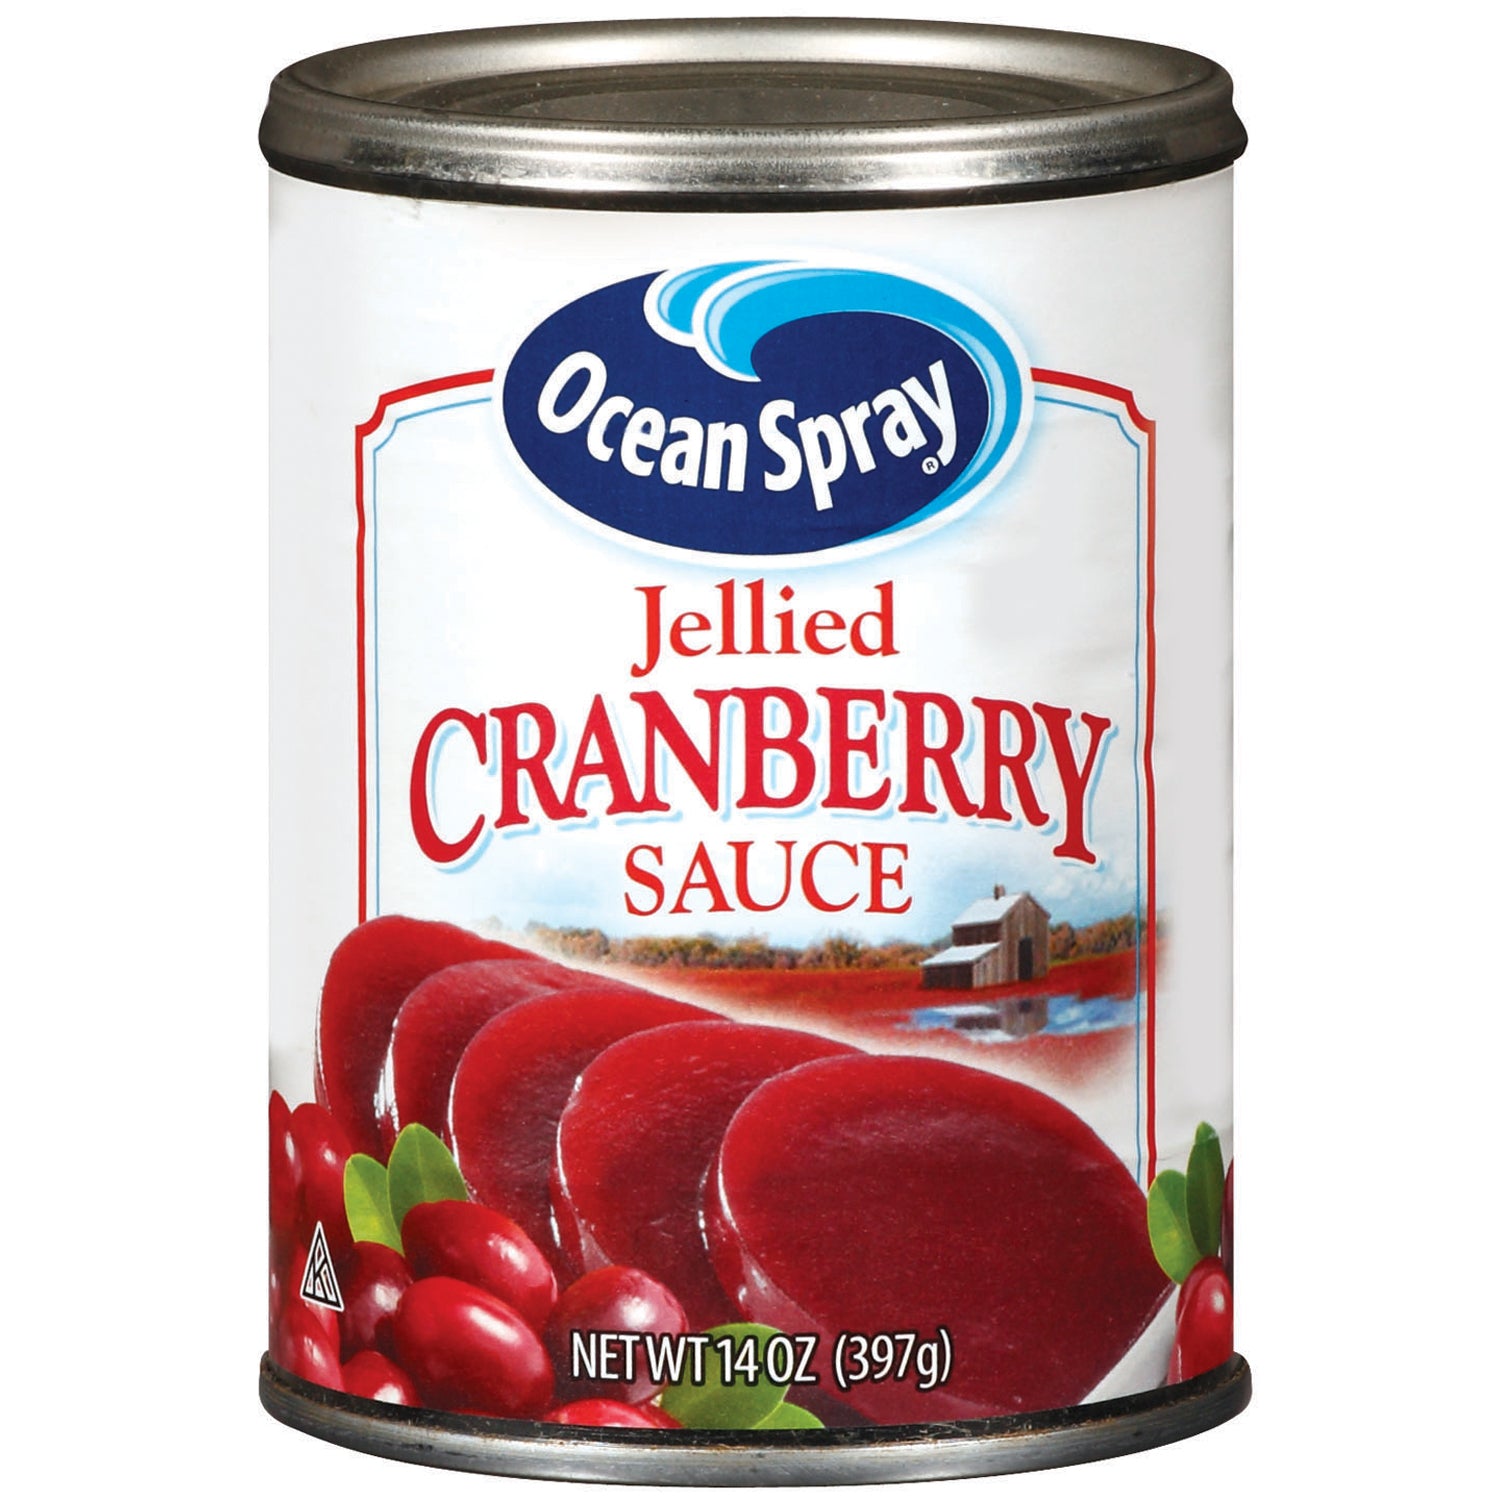 Ocean Spray Cranberry Sauce Jellied 14oz